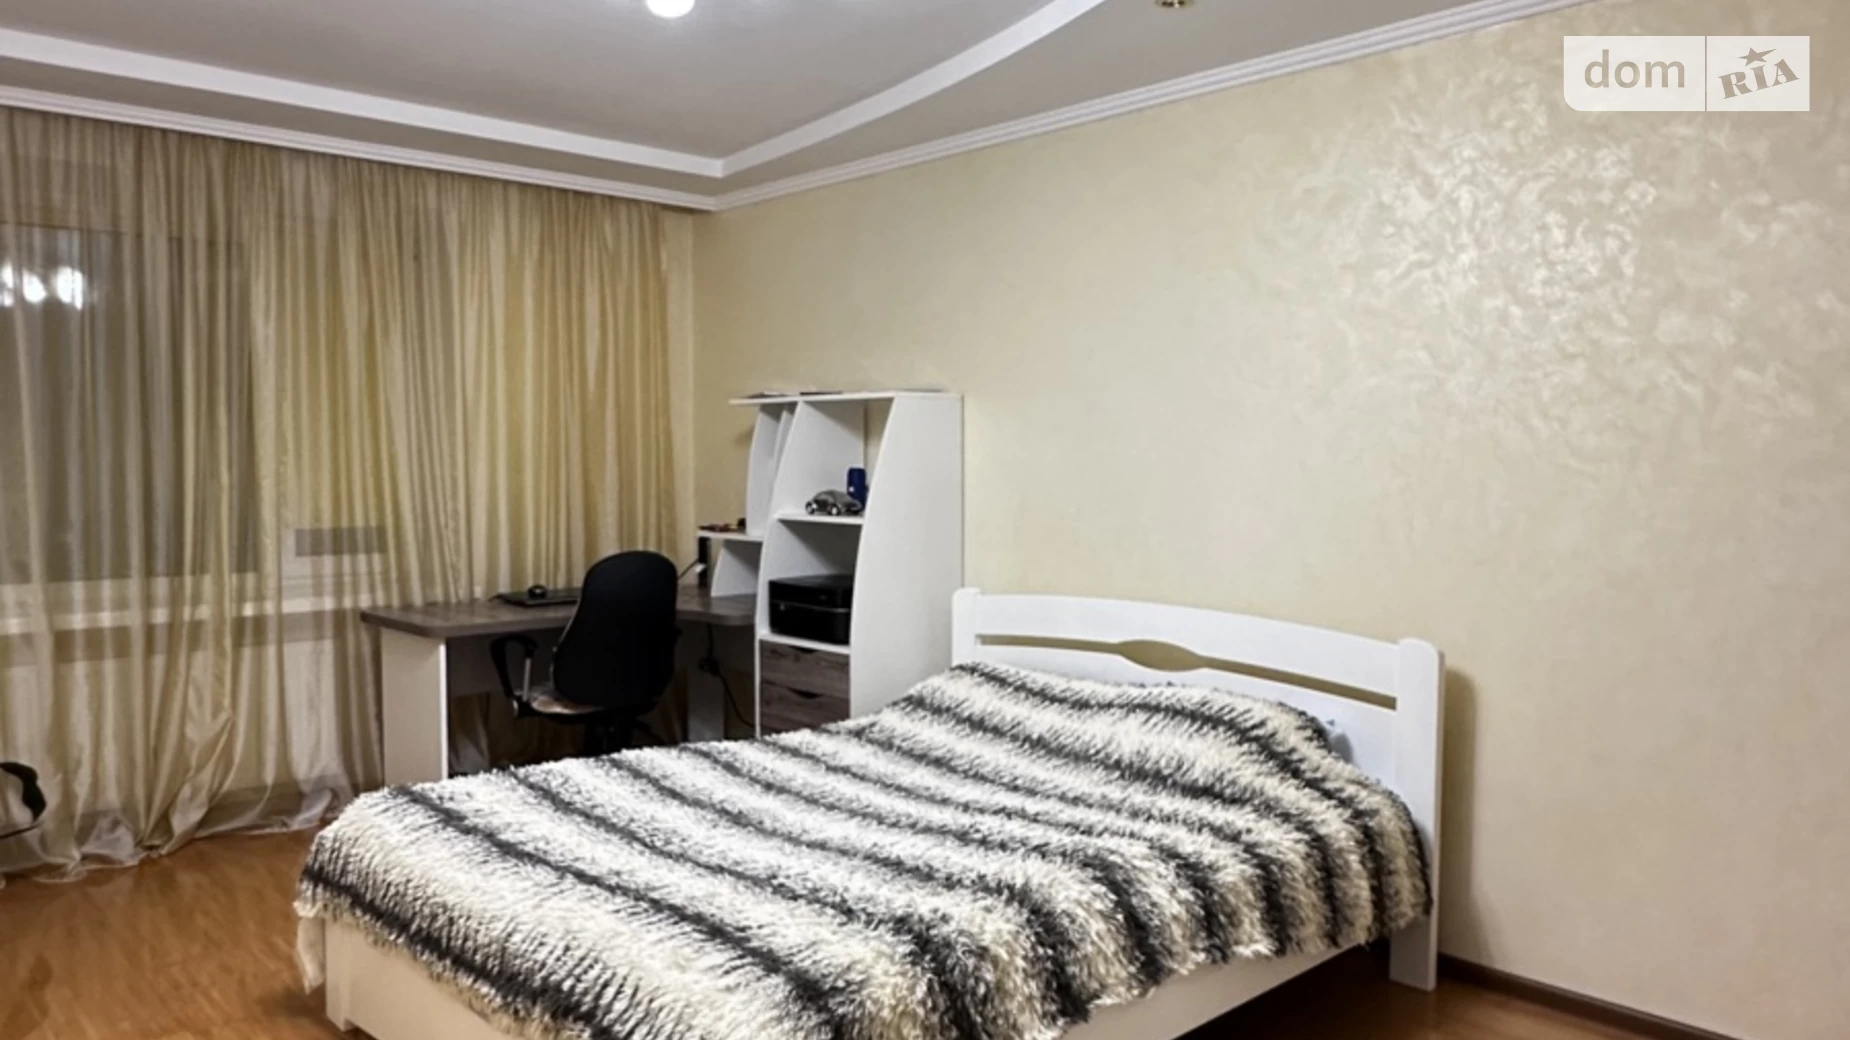 Продається 2-кімнатна квартира 71 кв. м у Хмельницькому, вул. Панаса Мирного - фото 3